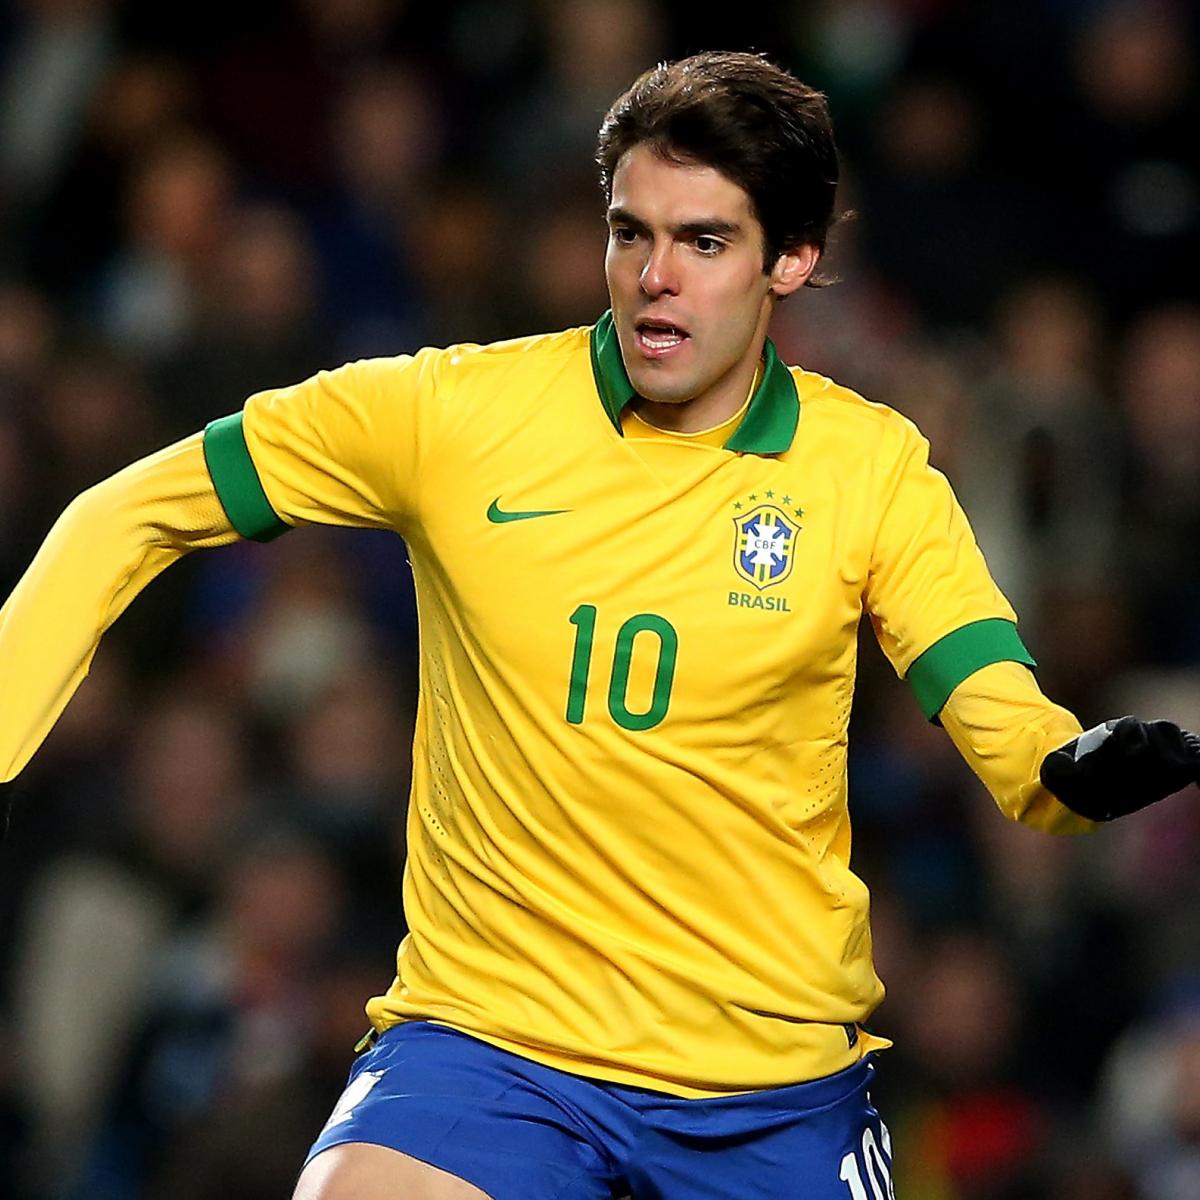 Brazil Soccer Player Kaka Brazil Soccer Star Kaka Visits Espn Wide World Of Sports